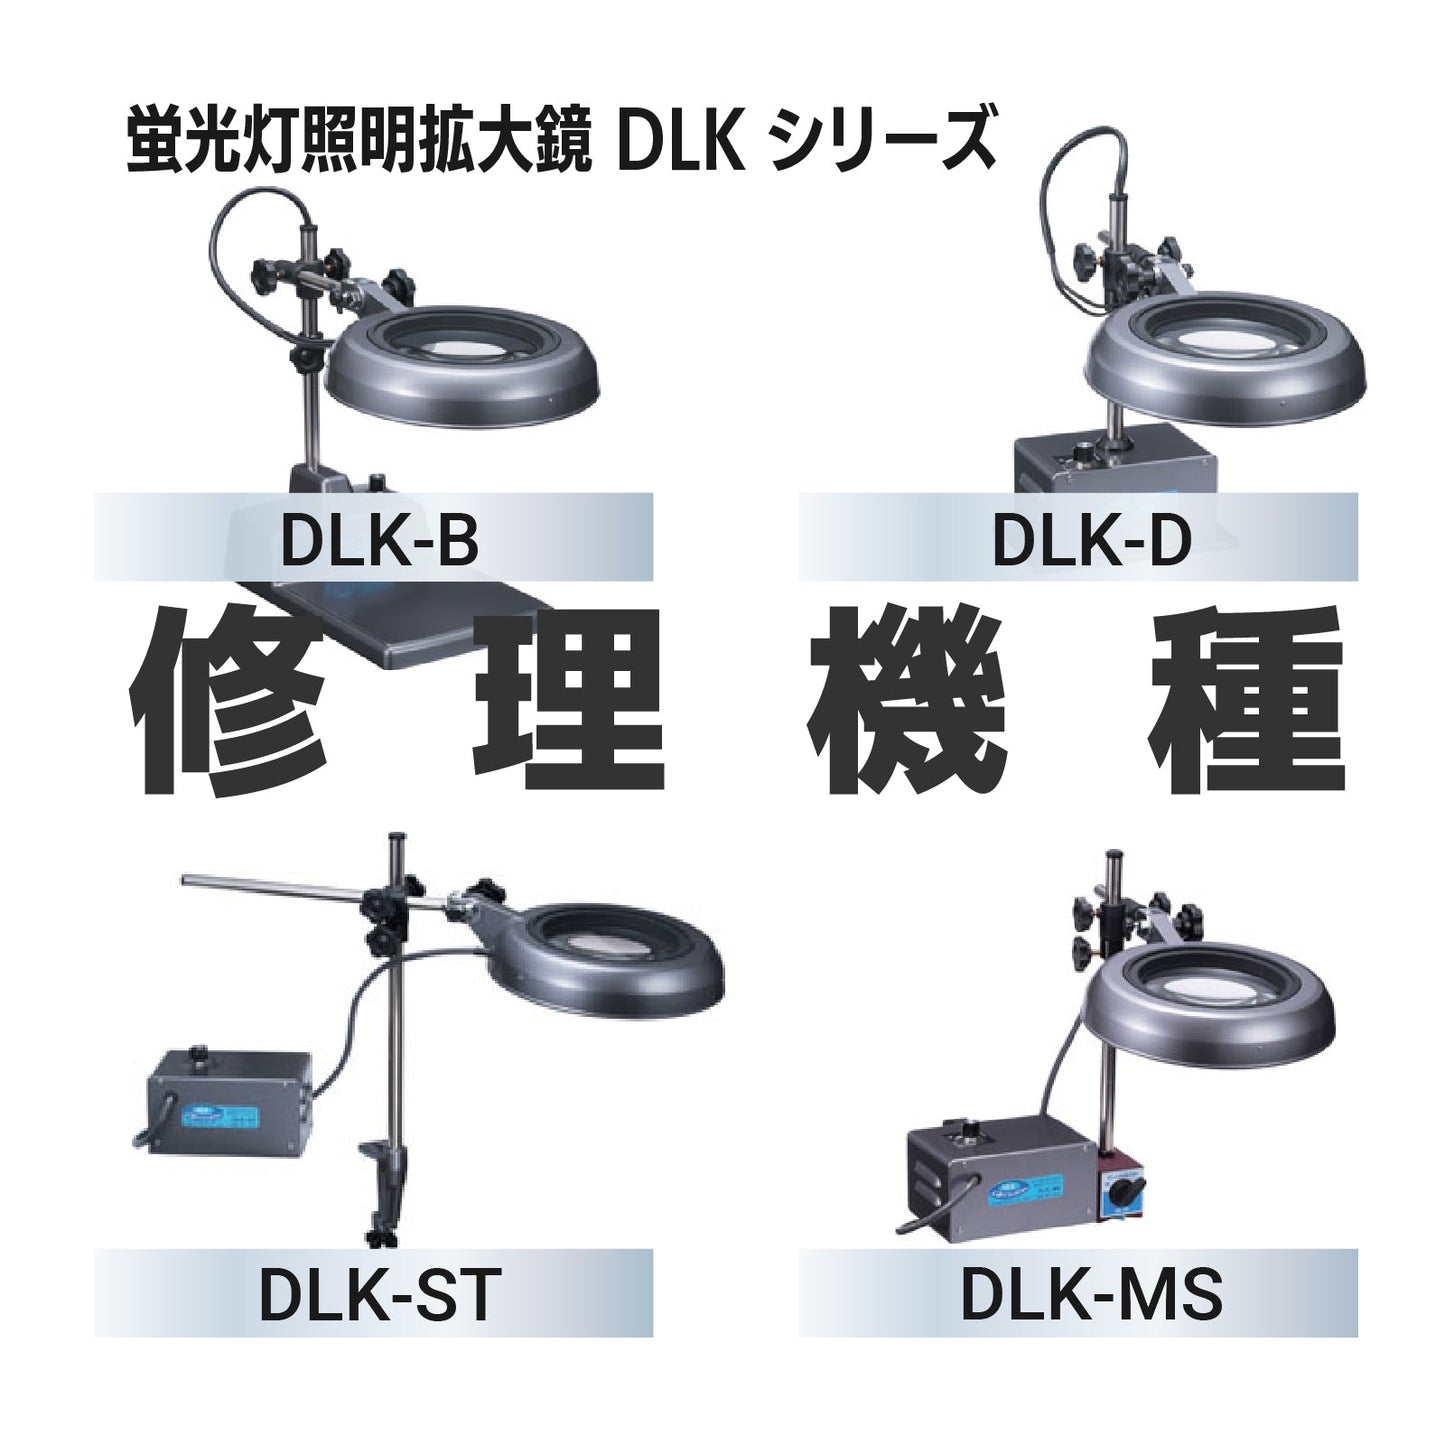 Serie DLK: DLK-B,D,ST,MS